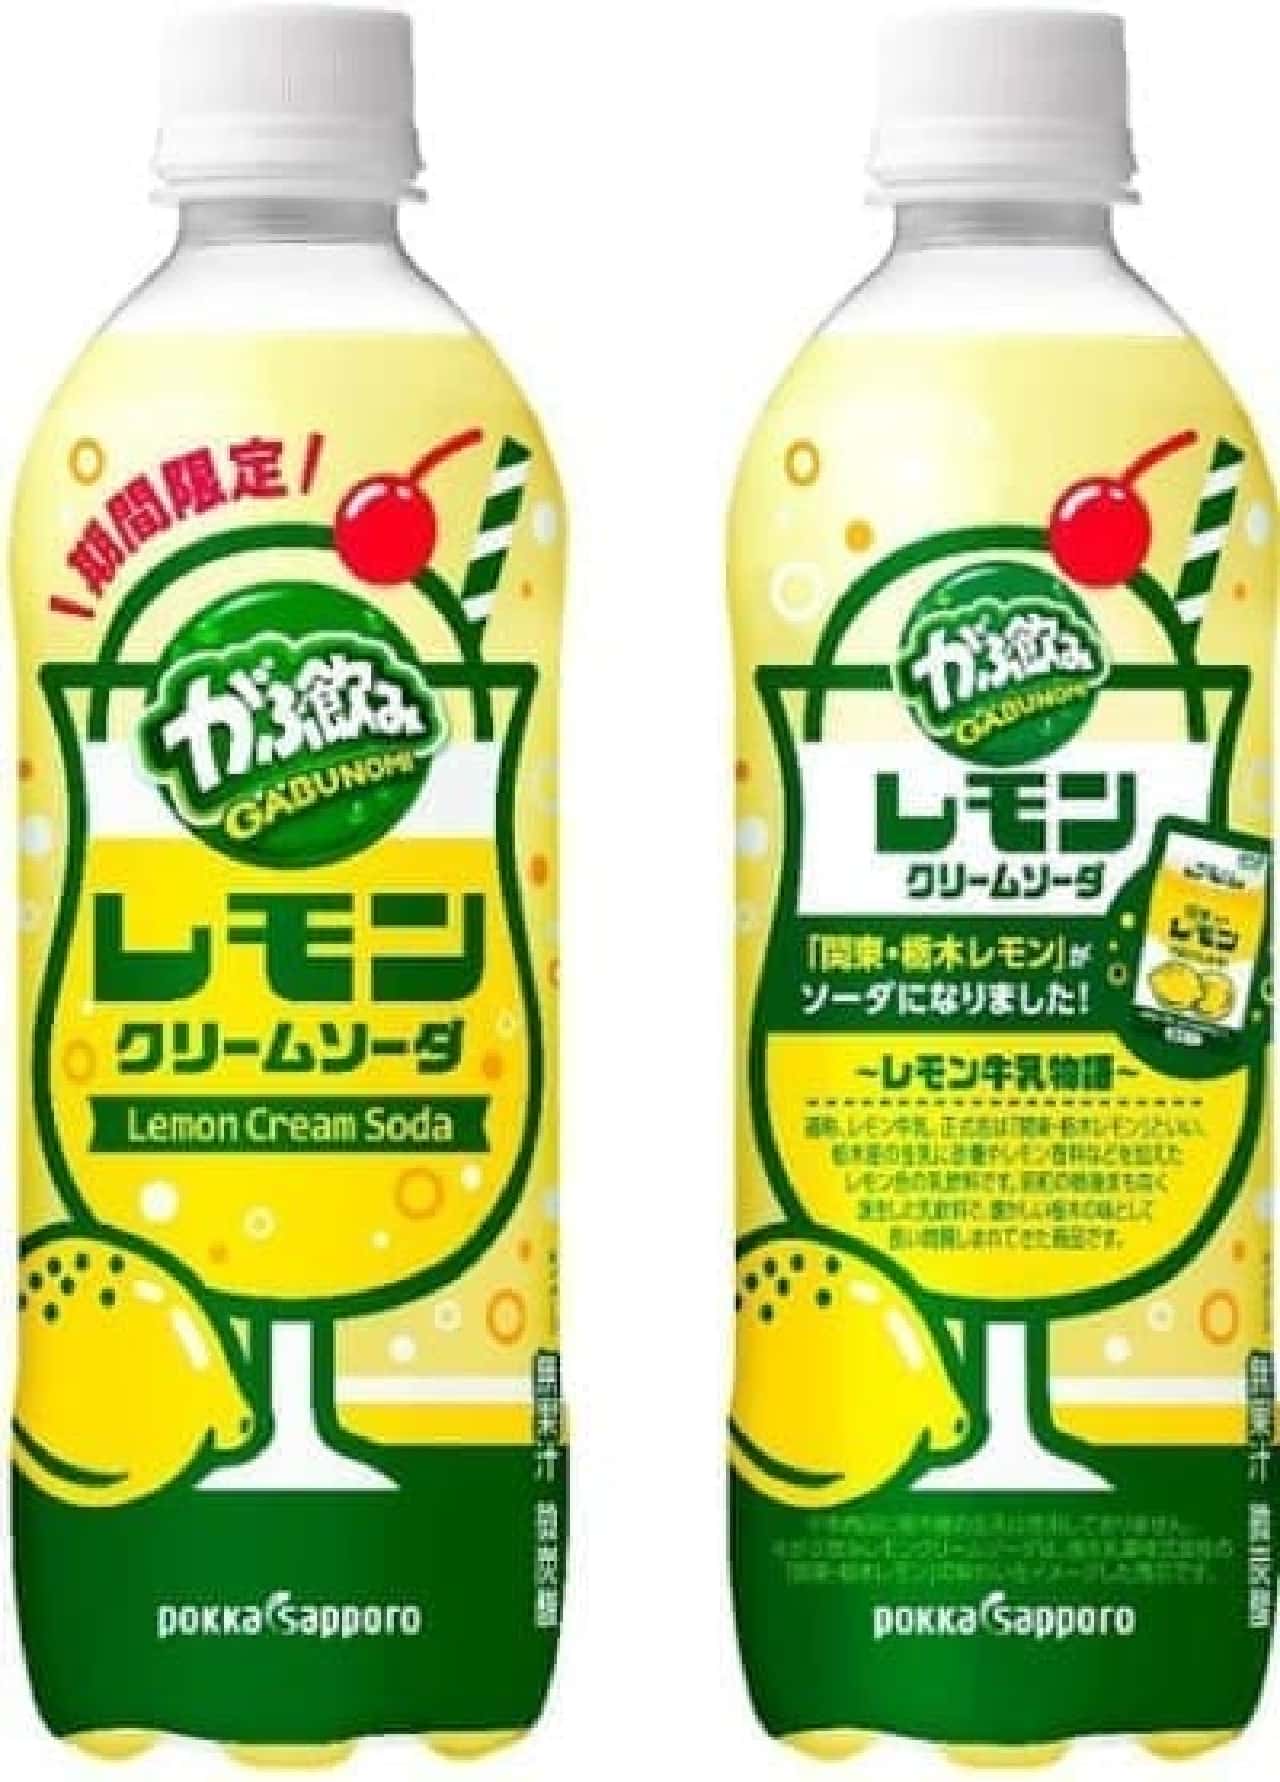 Gabu Gabu Lemon Cream Soda